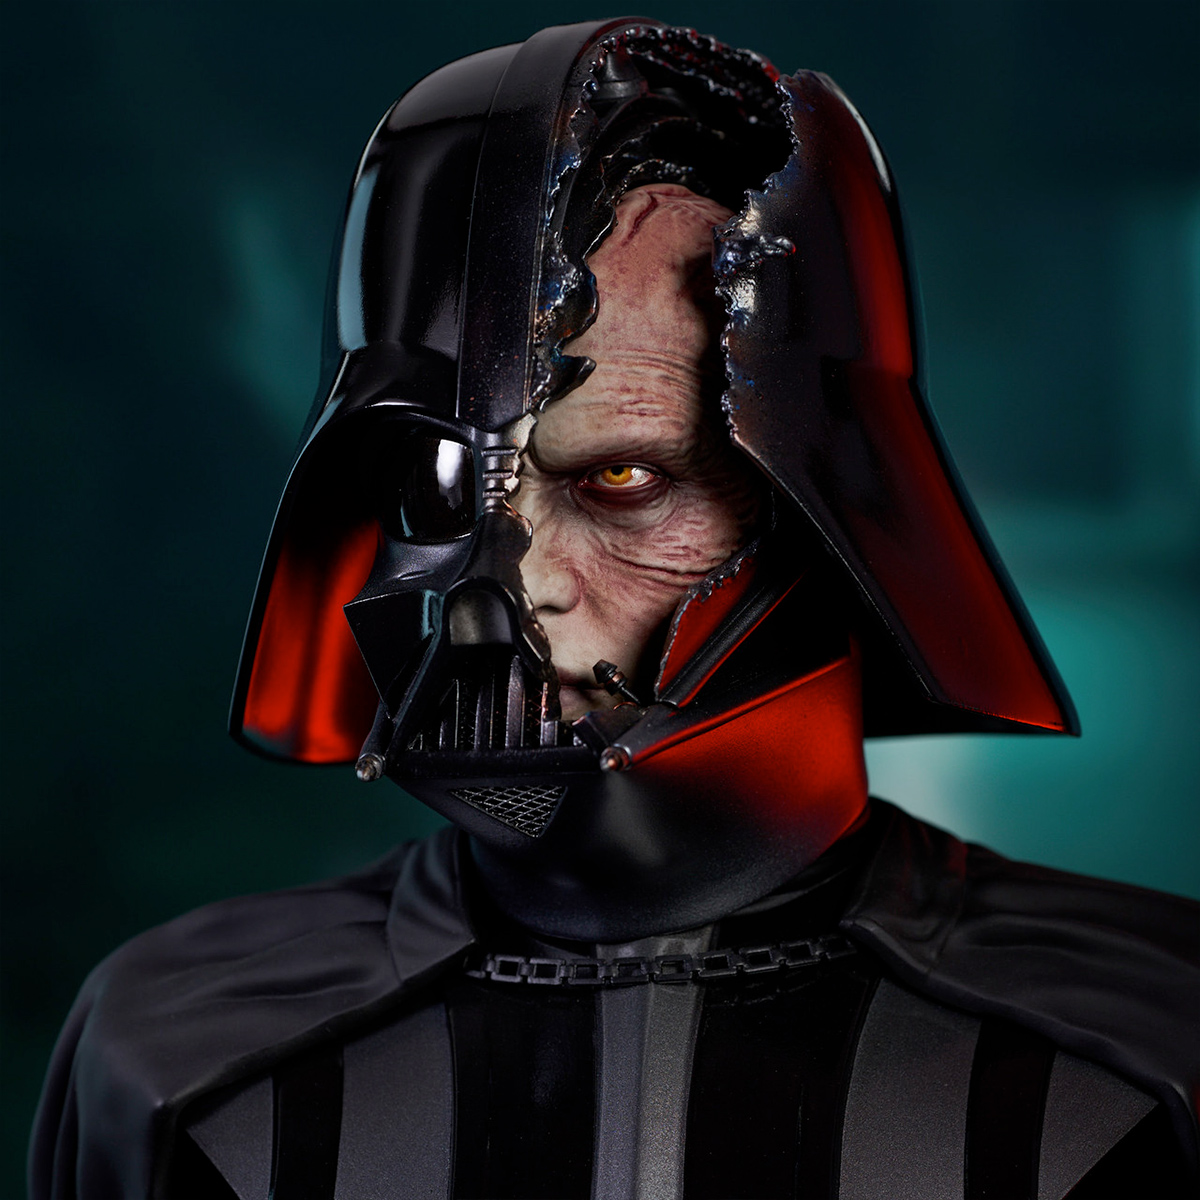 Busto Star Wars Legends in 3D: Darth Vader com Capacete Danificado da Série Obi-Wan Kenobi